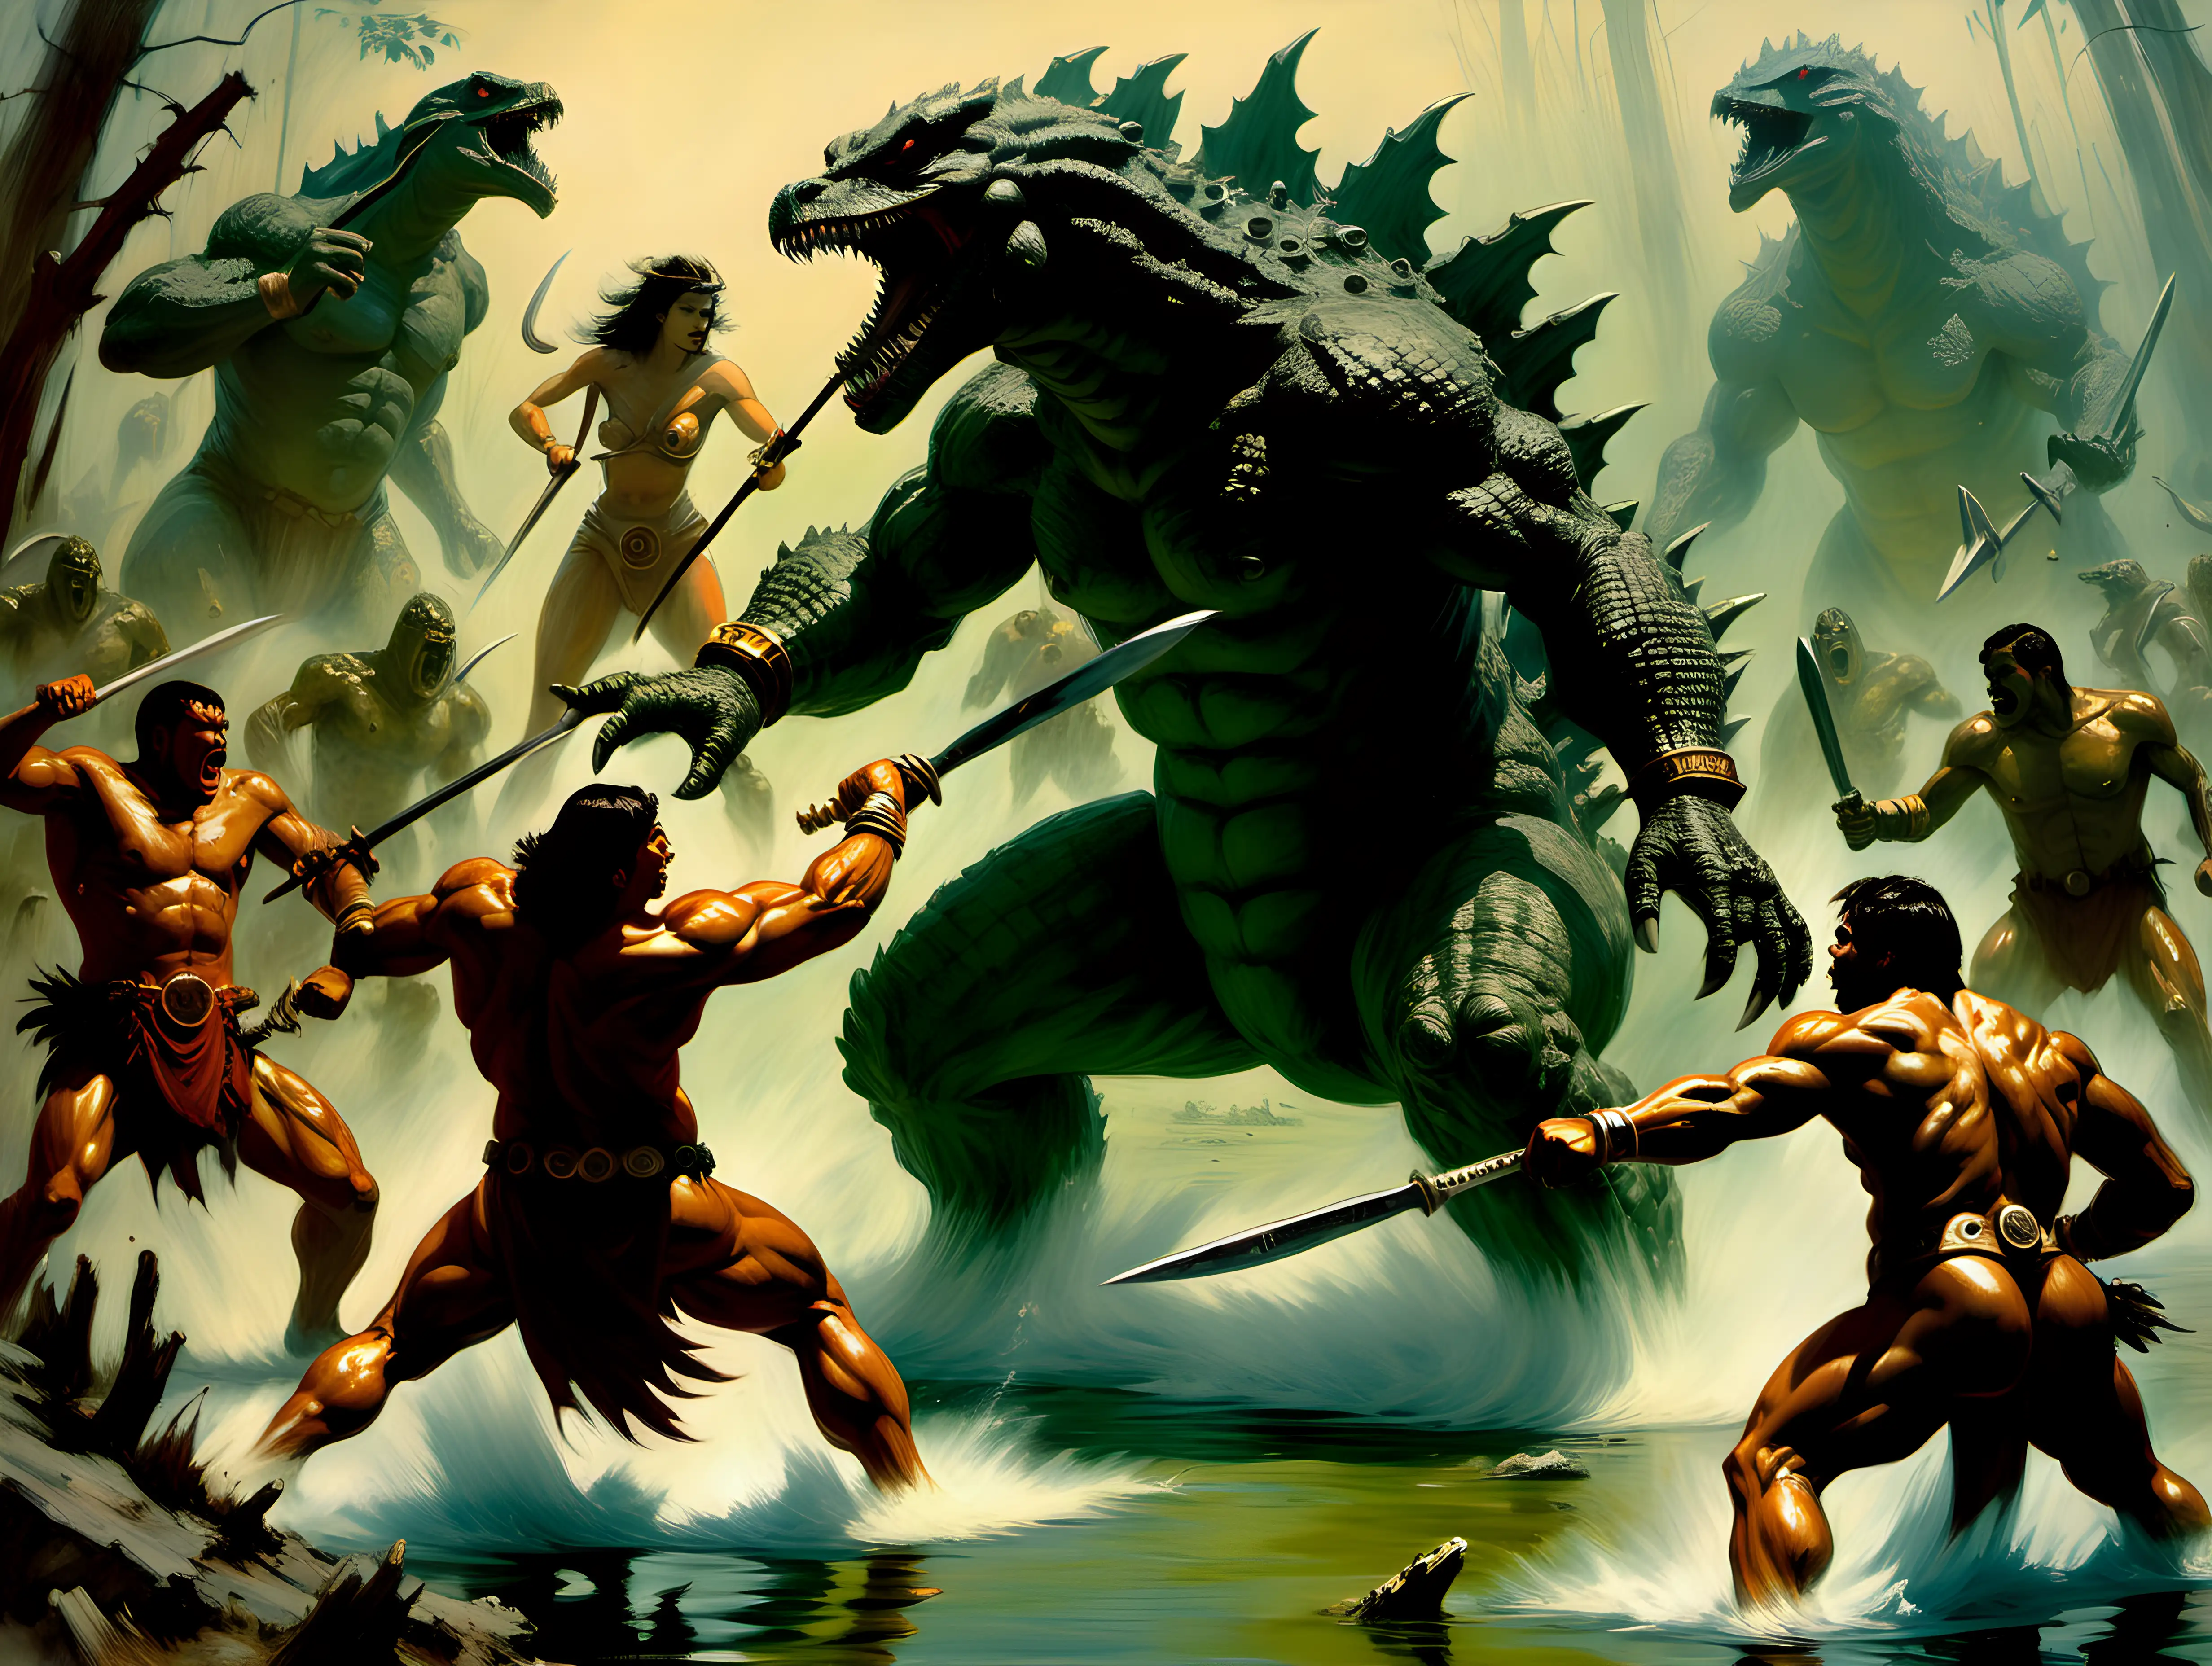 Epic Battle Gladiators Confront Godzilla in Ancient Swamp Frank Frazetta Style